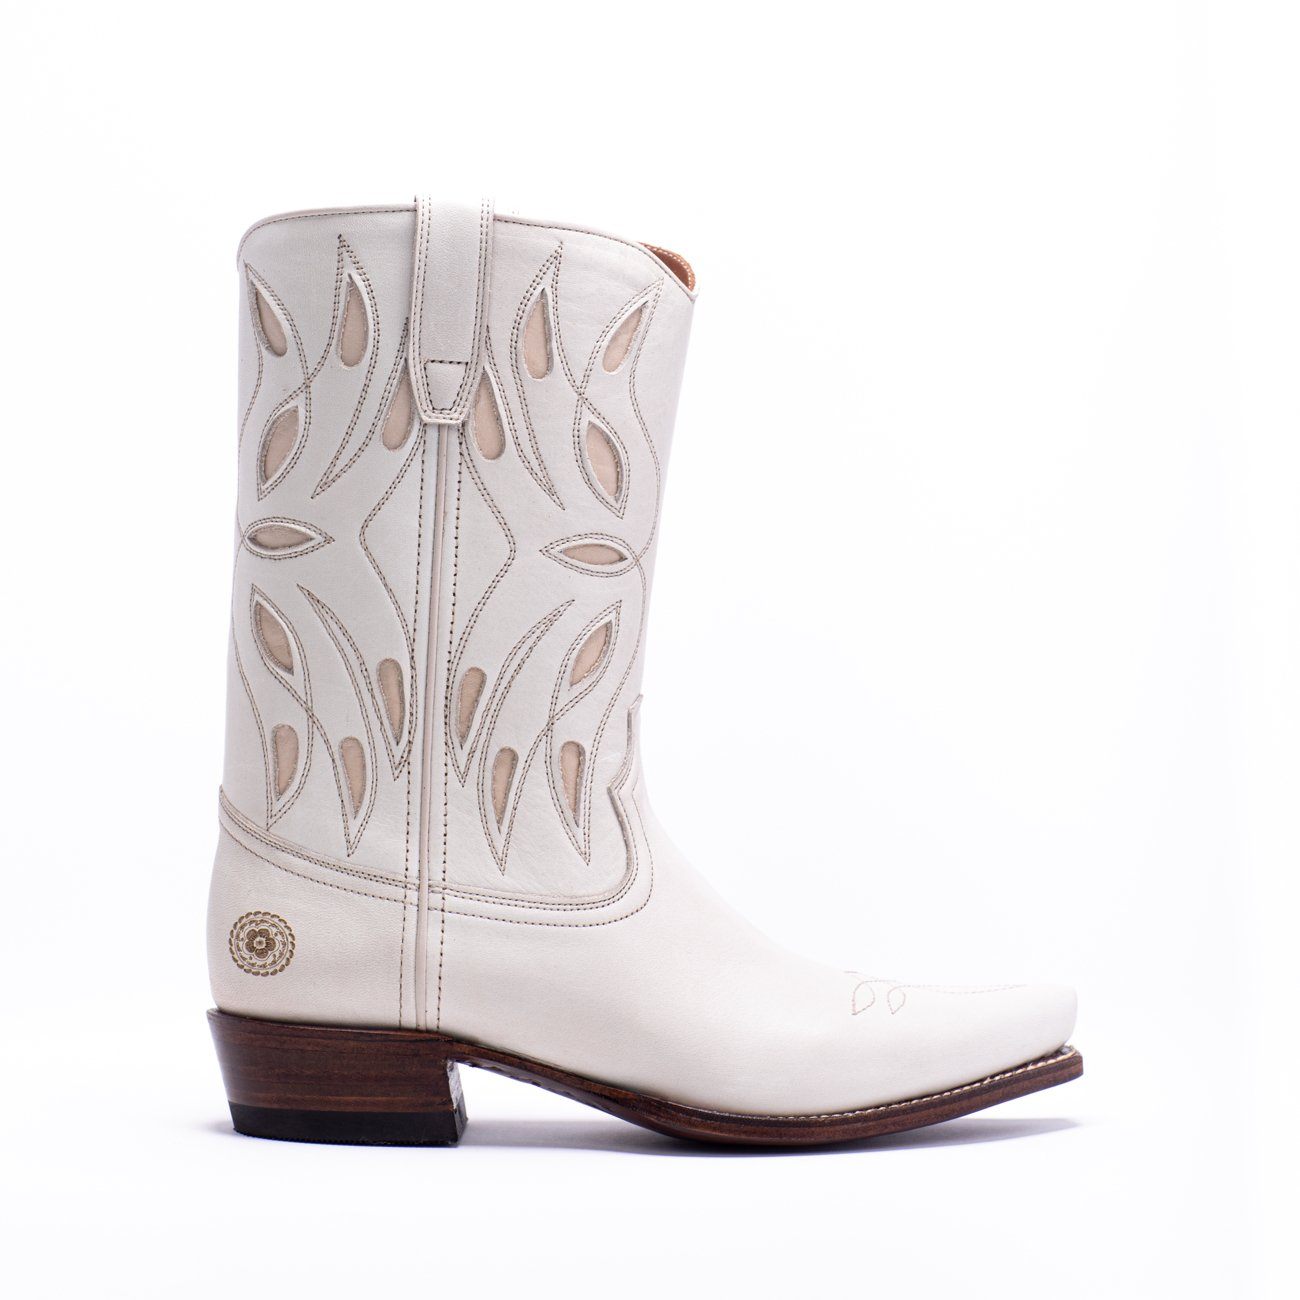 Previs site Beeldhouwwerk Vereniging Womens Sagebrush White Leather Cowboy Boot - Ranch Road Boots™